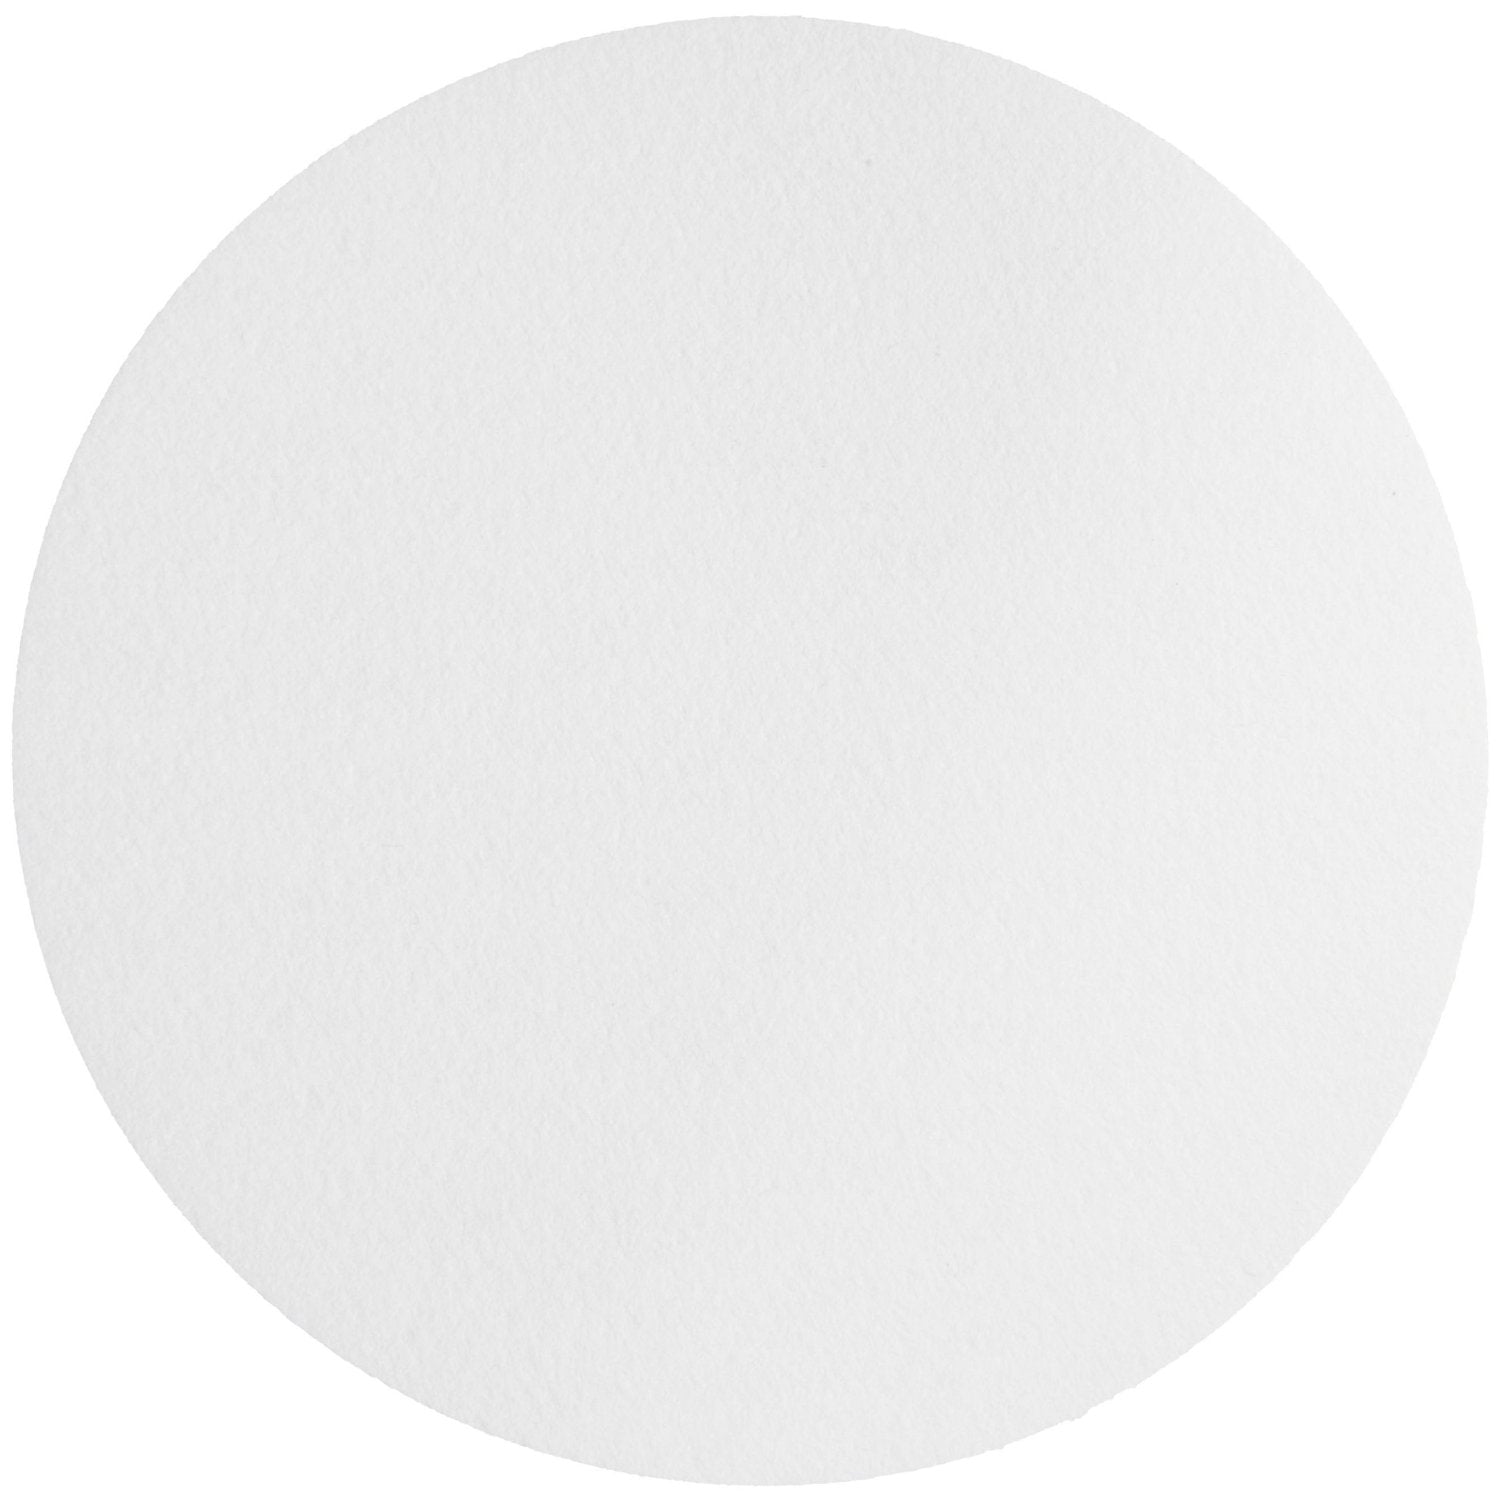 Whatman 7193-002 Cellulose Nitrate, 25mm Dia, 3.0 micrometer Pore Size, Plain White, 100/pk (PN: 7193-002)